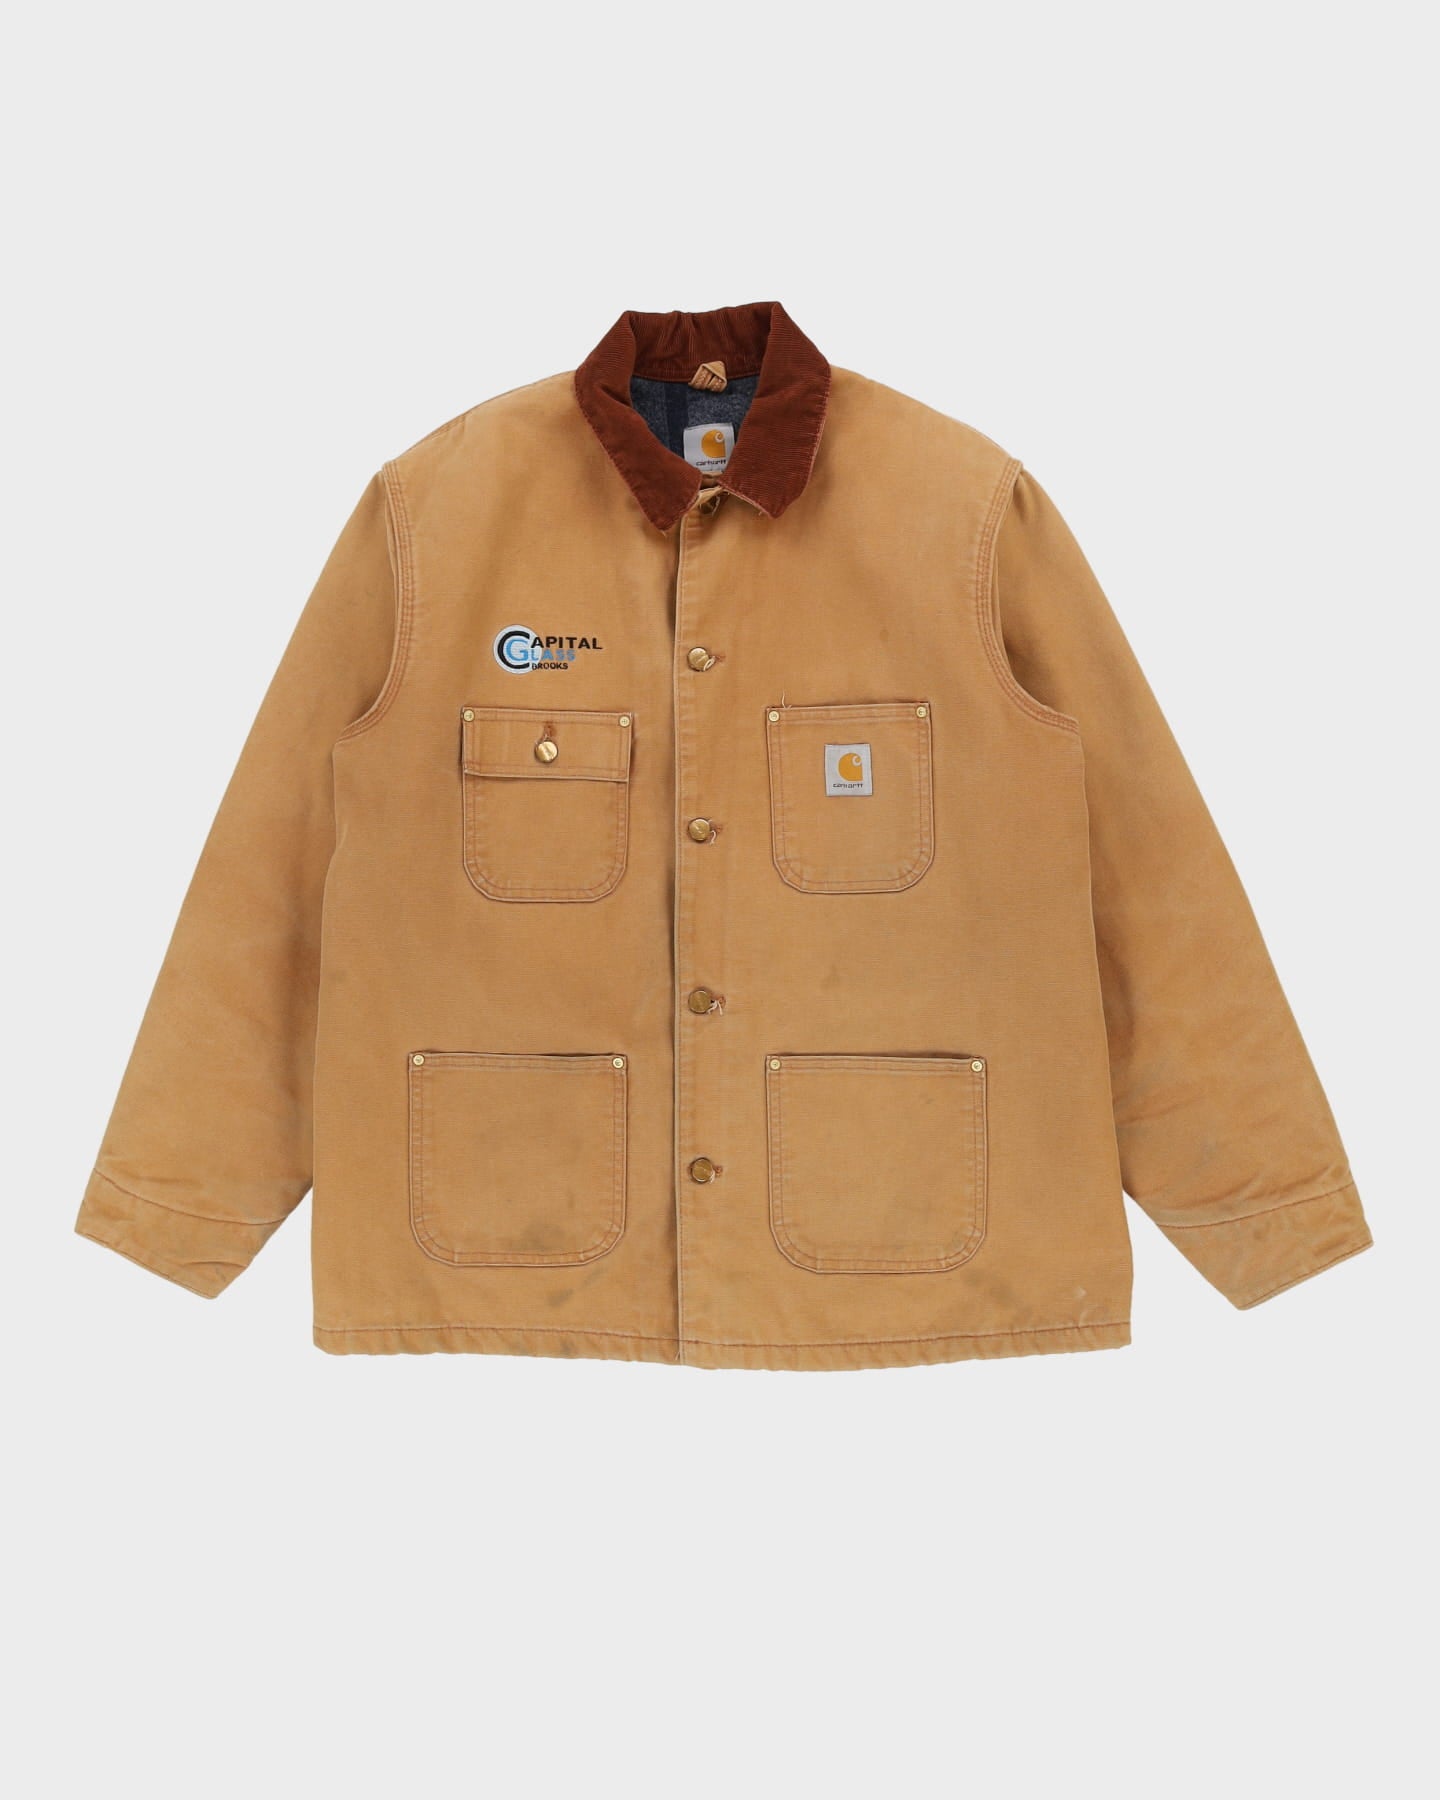 Carhartt Beige Workwear / Chore Jacket - L